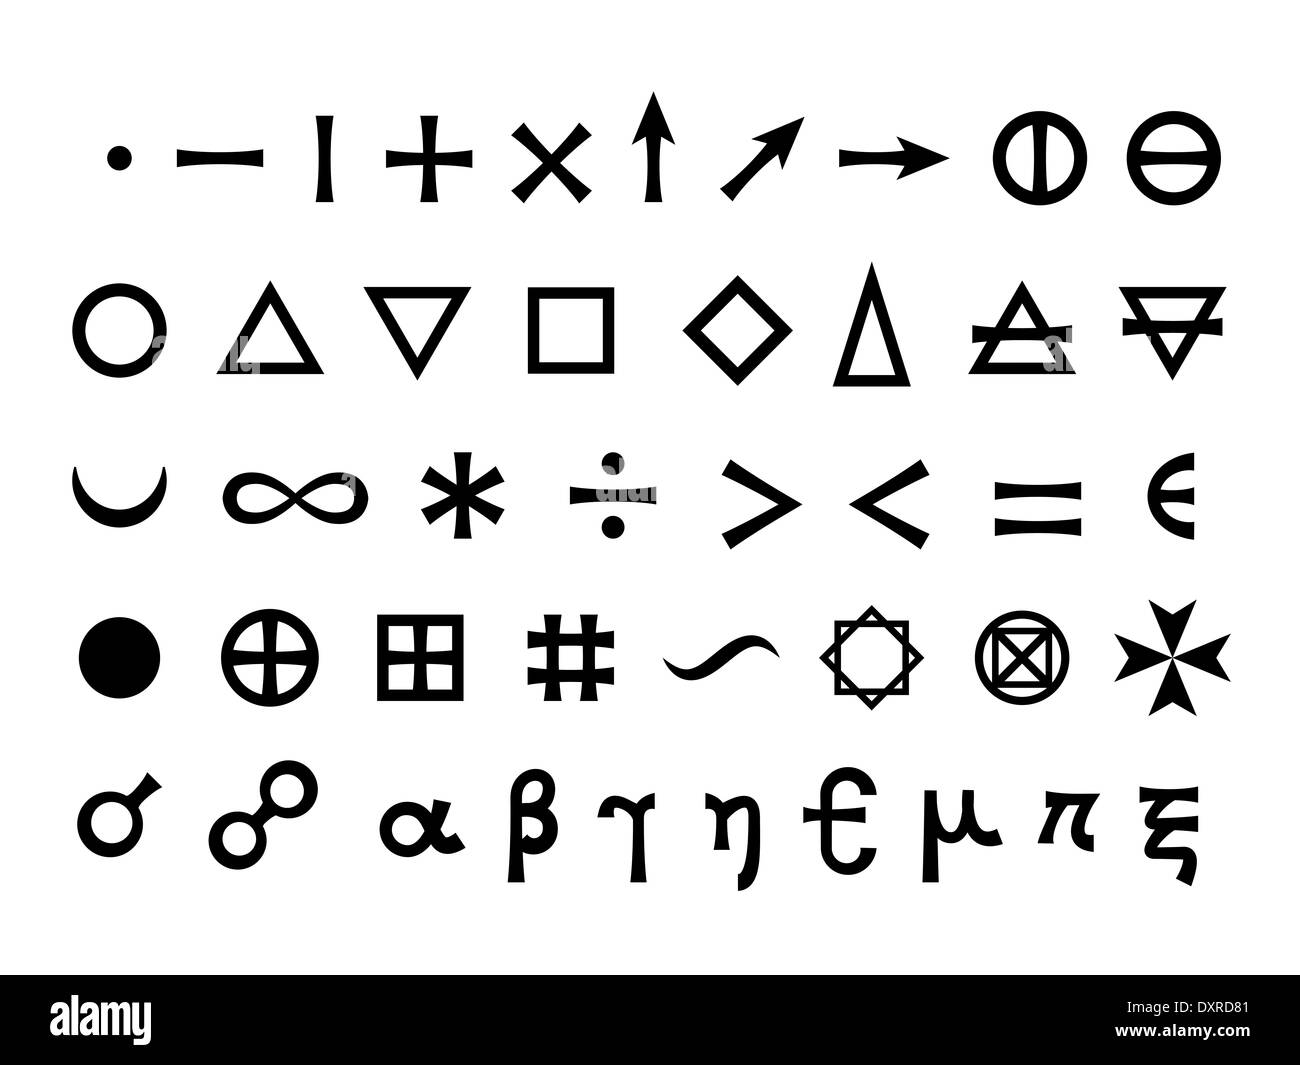 Basic Signs, Fundamental Elements and Mathematical Symbols (Mystique Symbols set) Stock Photo